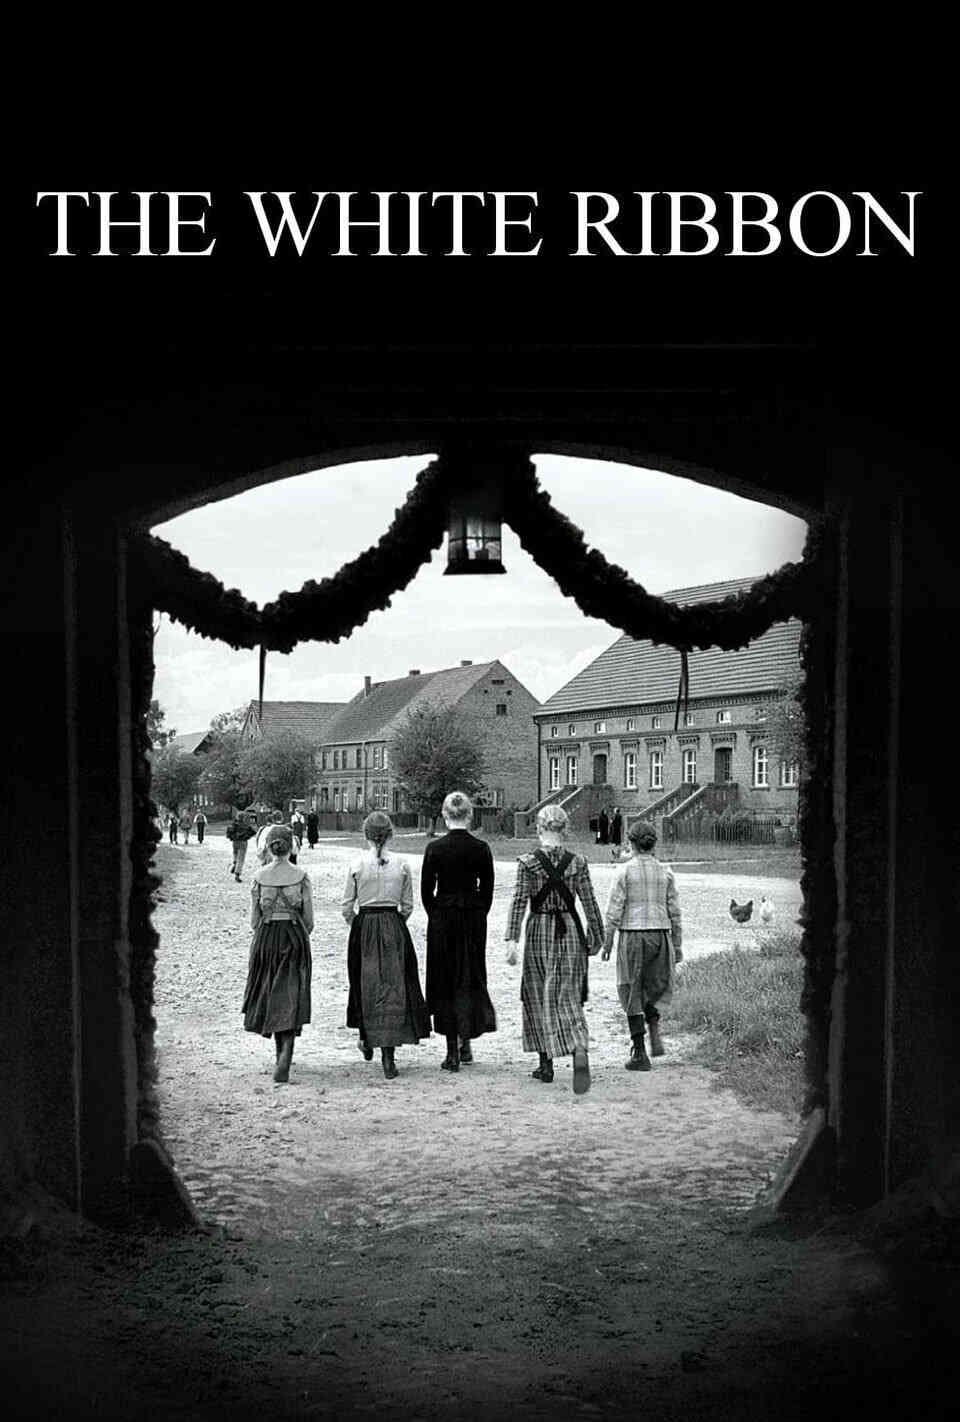 Read The White Ribbon screenplay.